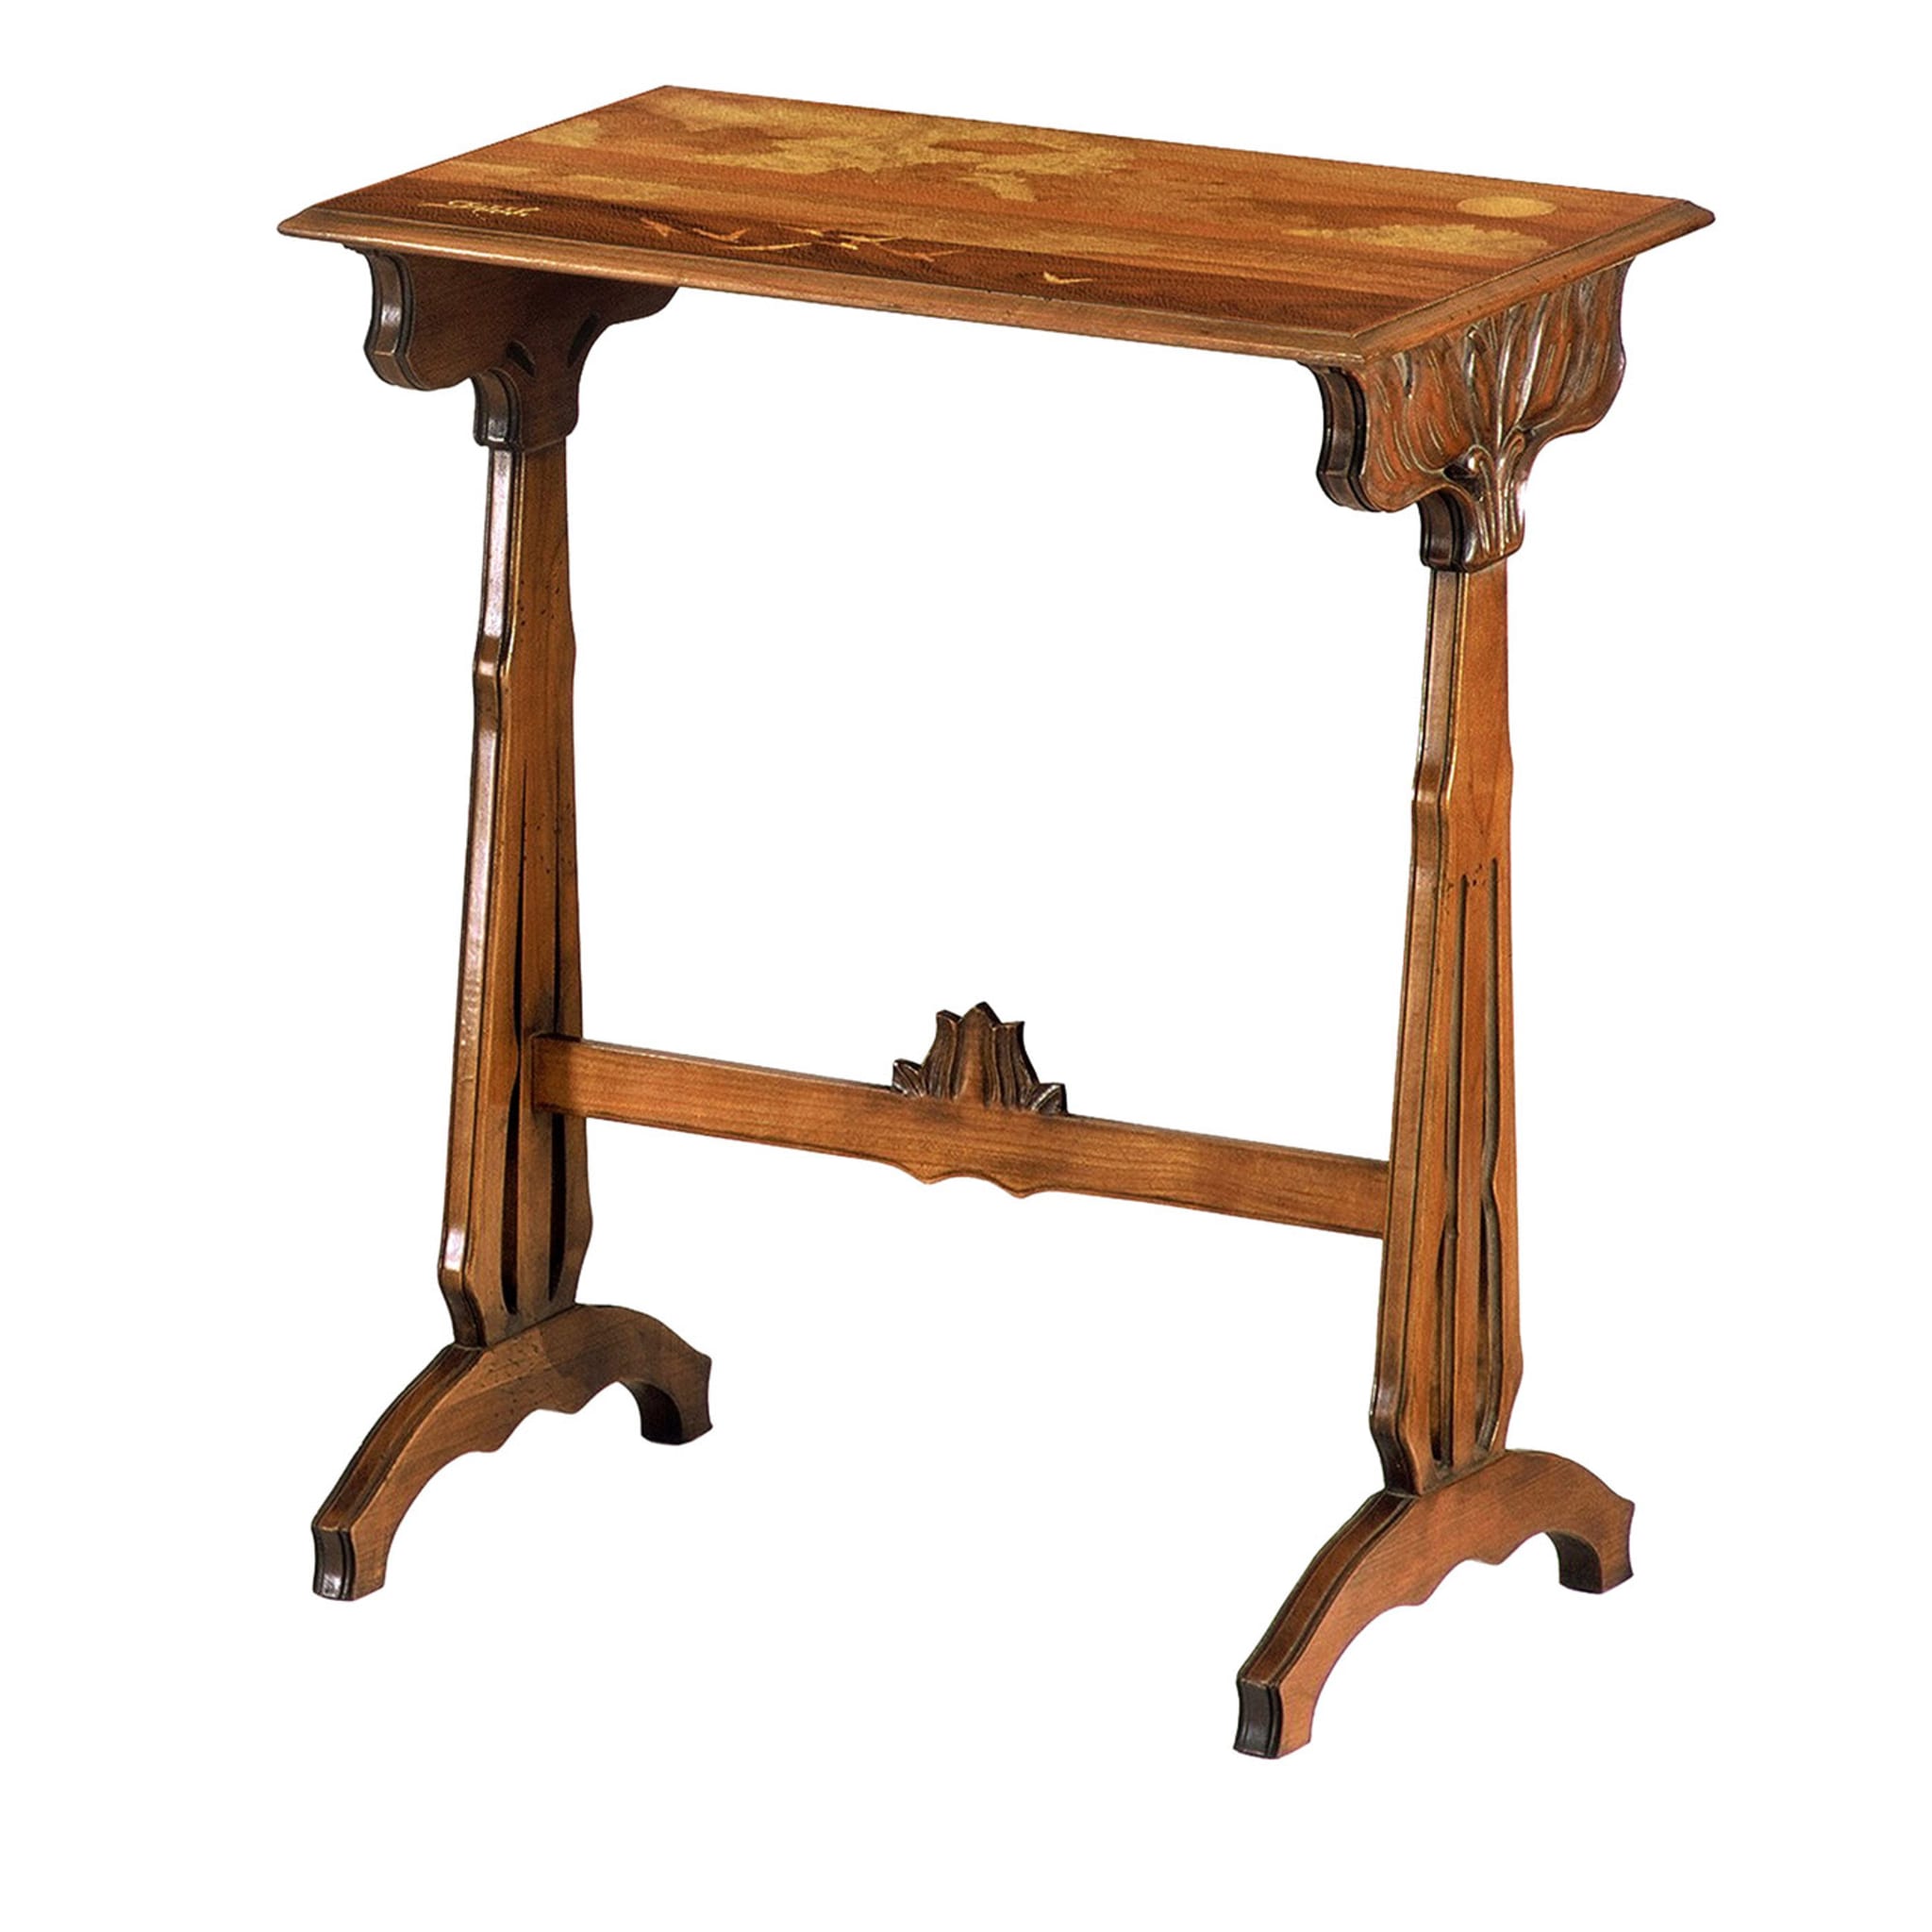 French Art Nouveau-Style Side Table by Emile Gallè #2 - Main view